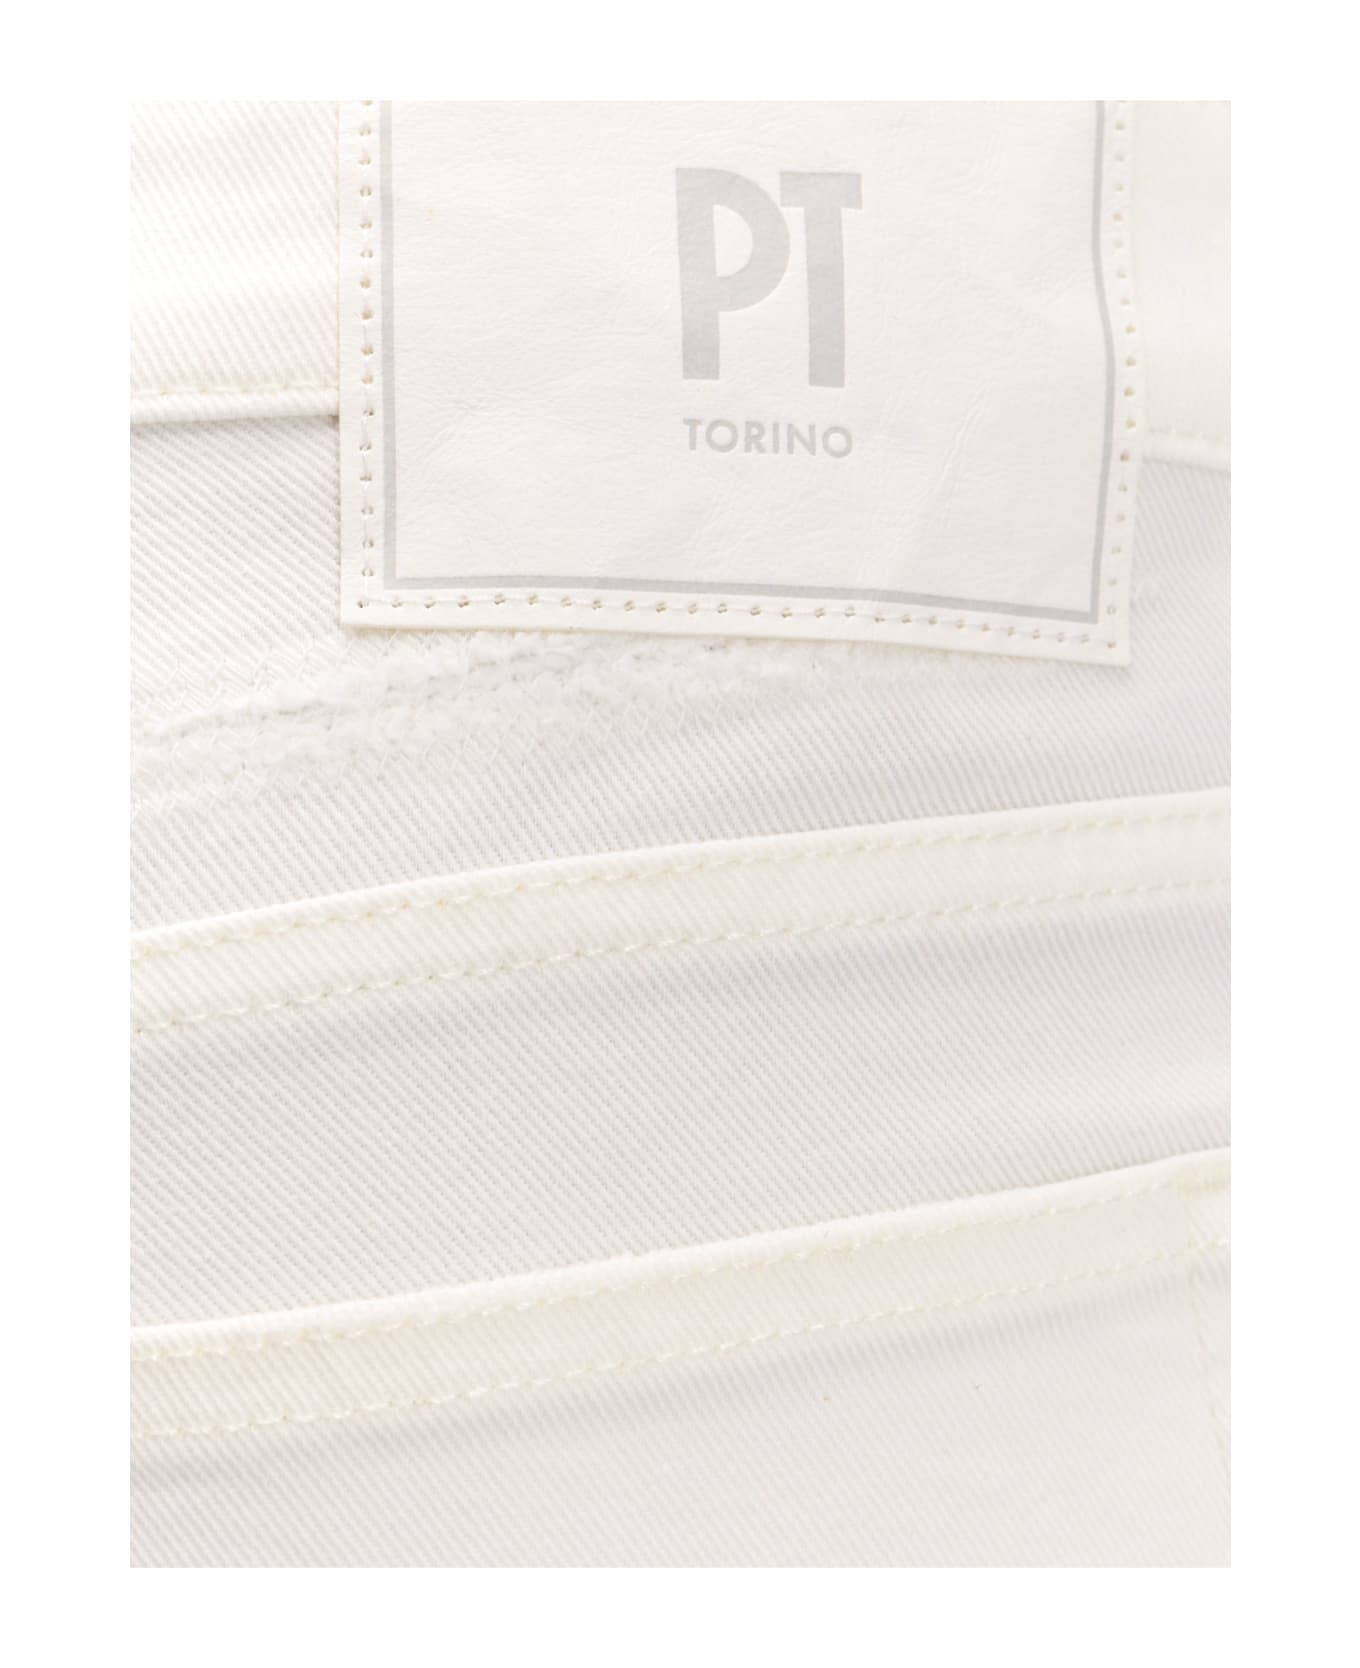 PT Torino Trouser Pt Torino - White